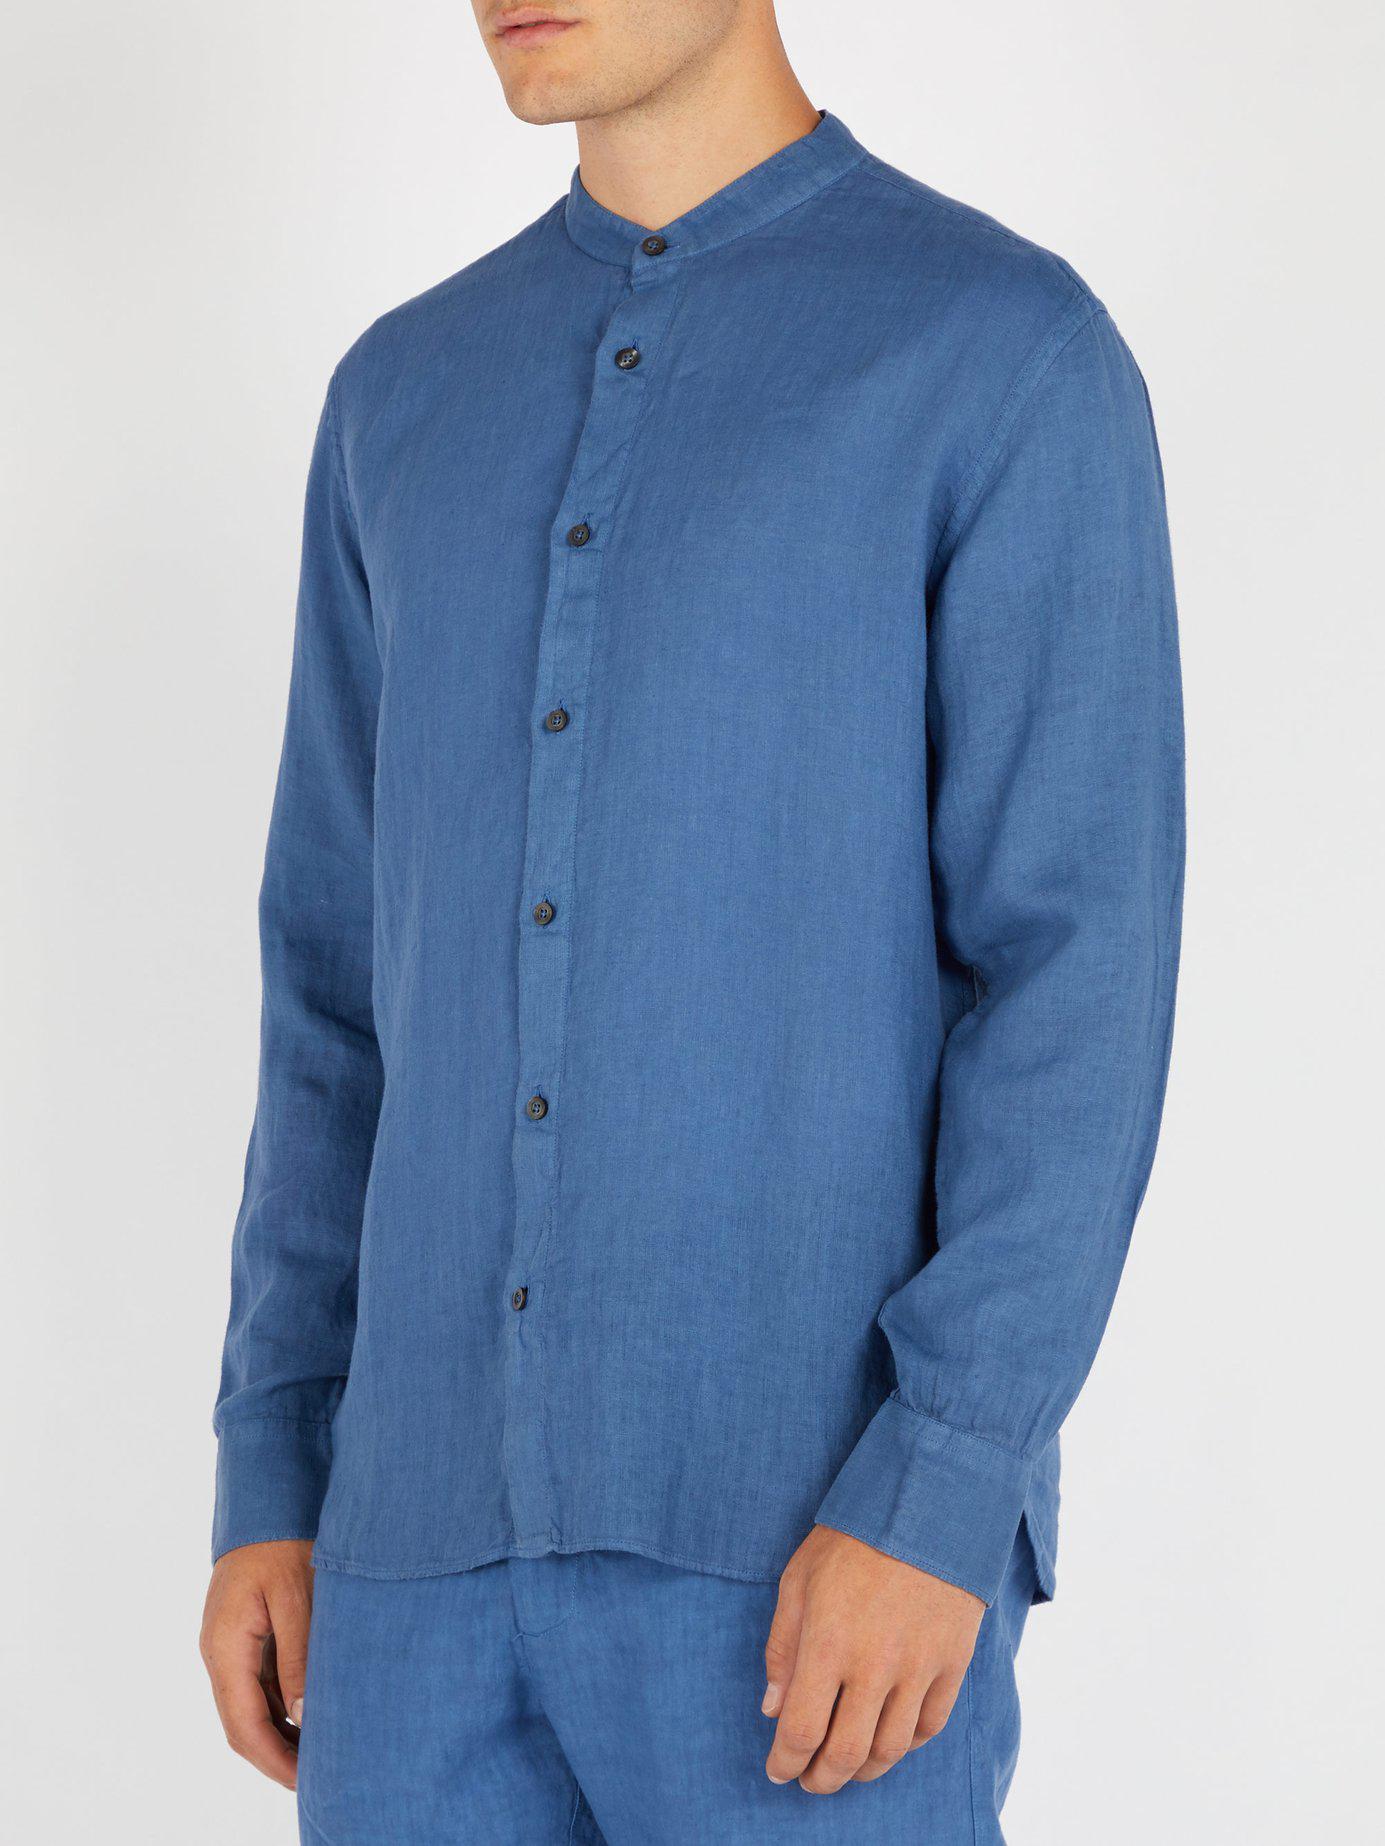 120% Lino Collarless Linen Shirt in Dark Blue (Blue) for Men - Lyst